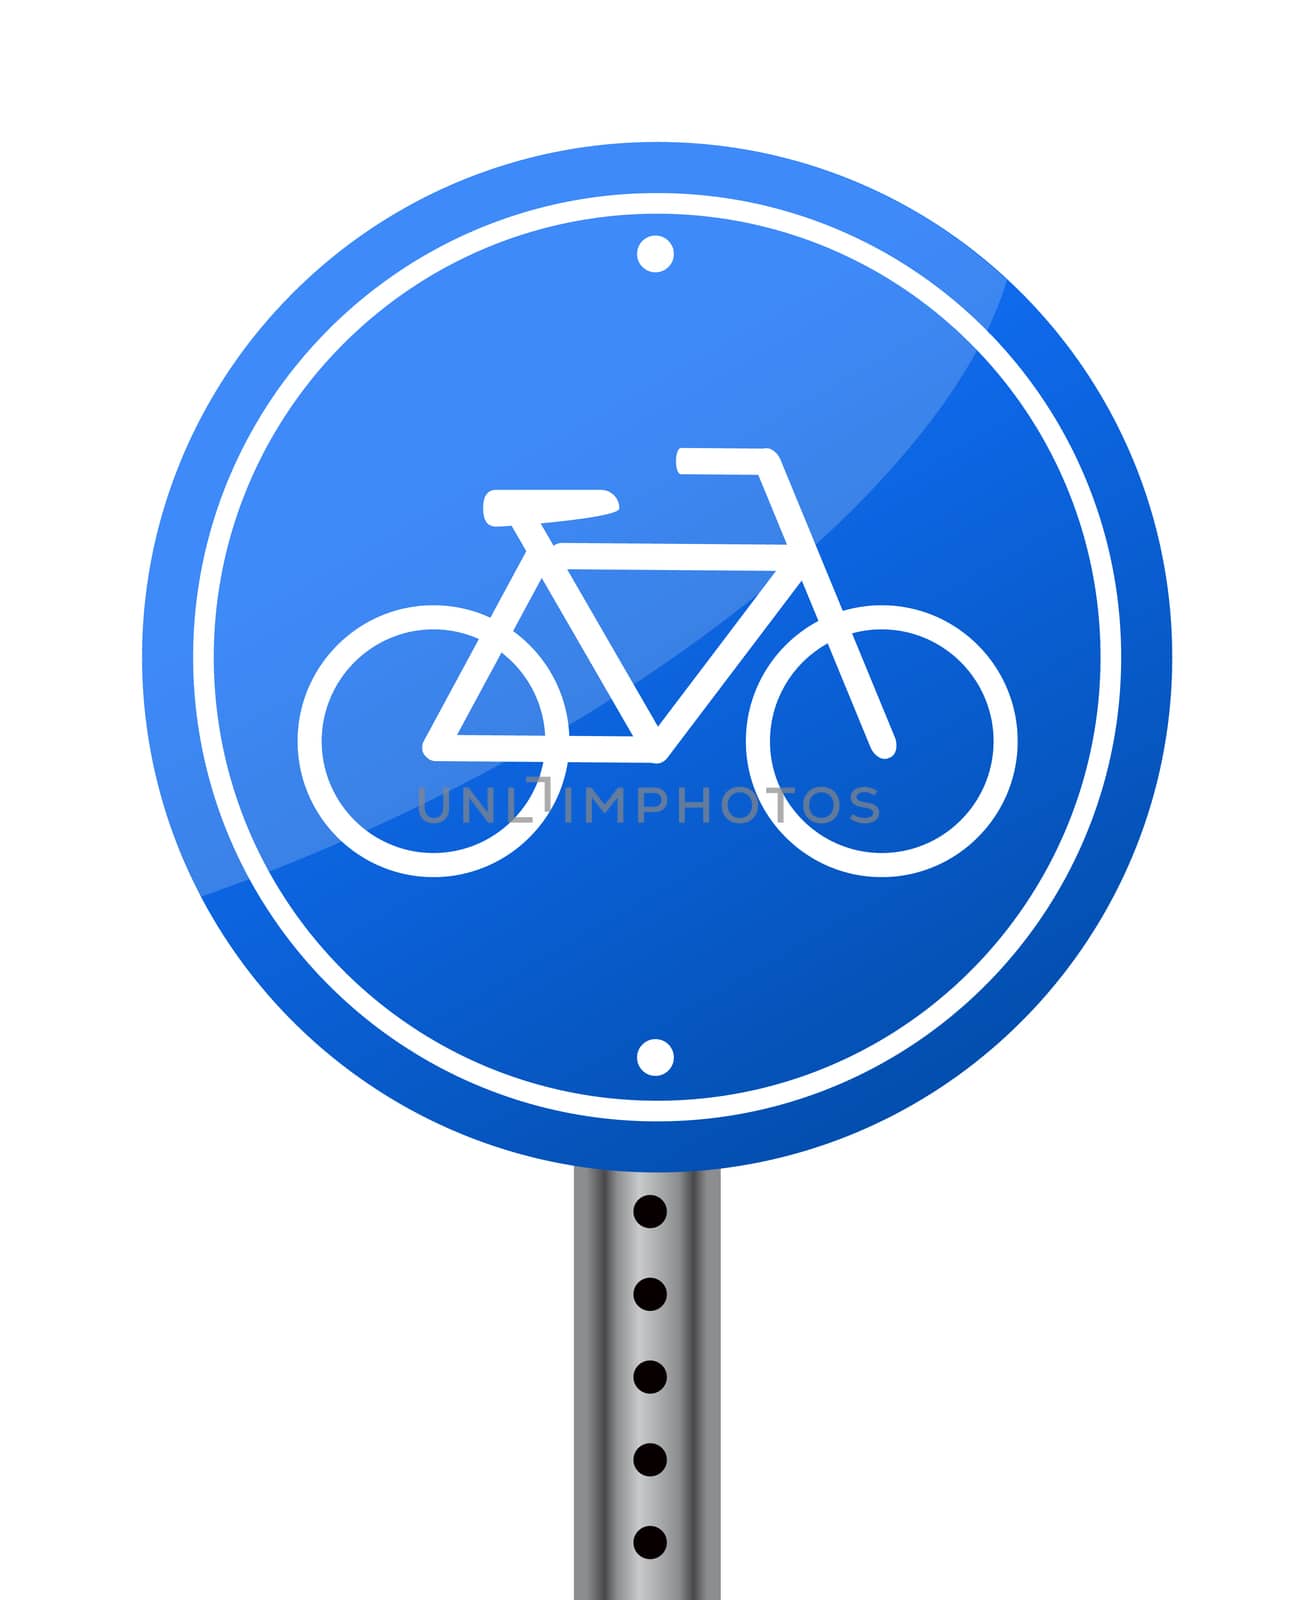 Blue bike road street sign on white background